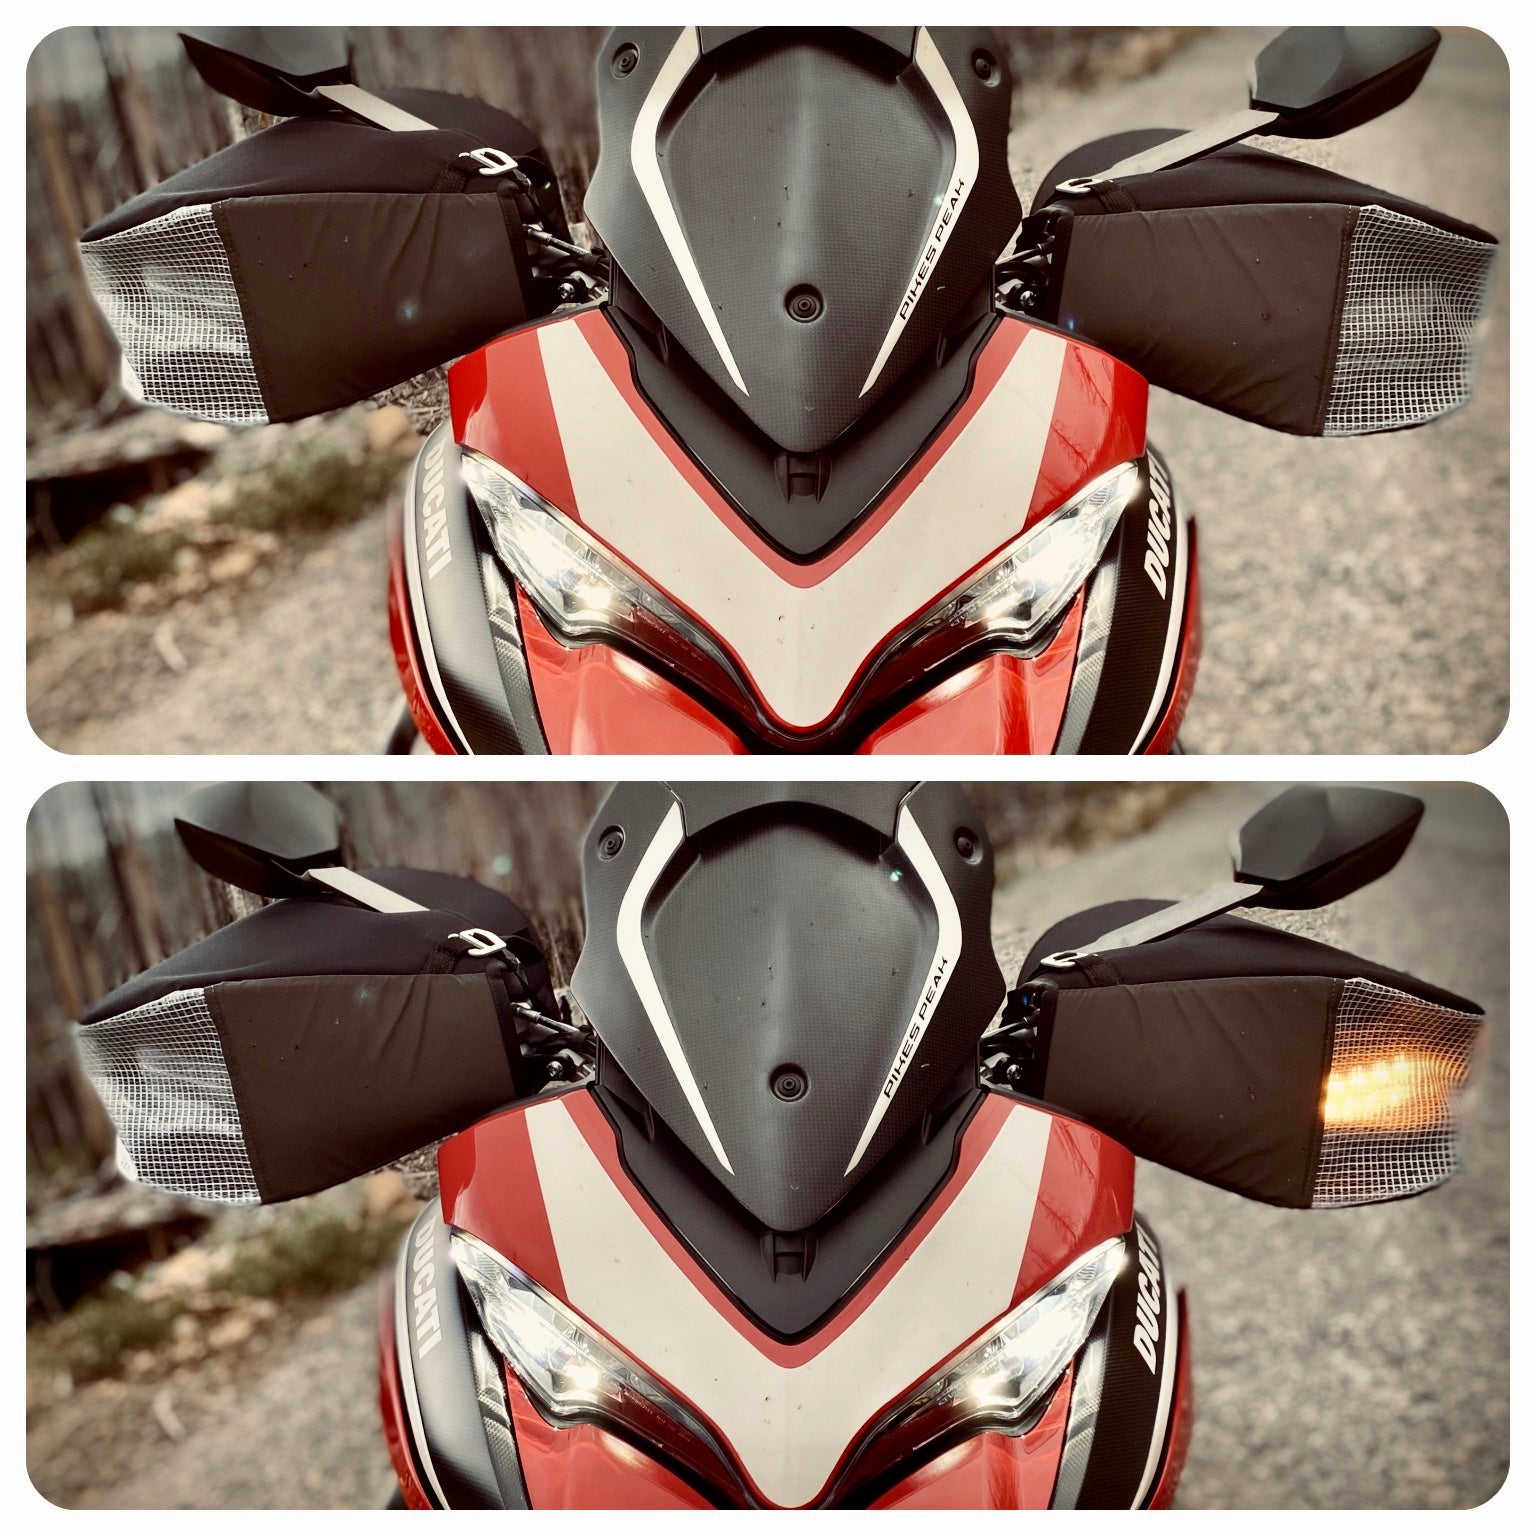 Duc — Ducati Multistrada motorcycle hand covers